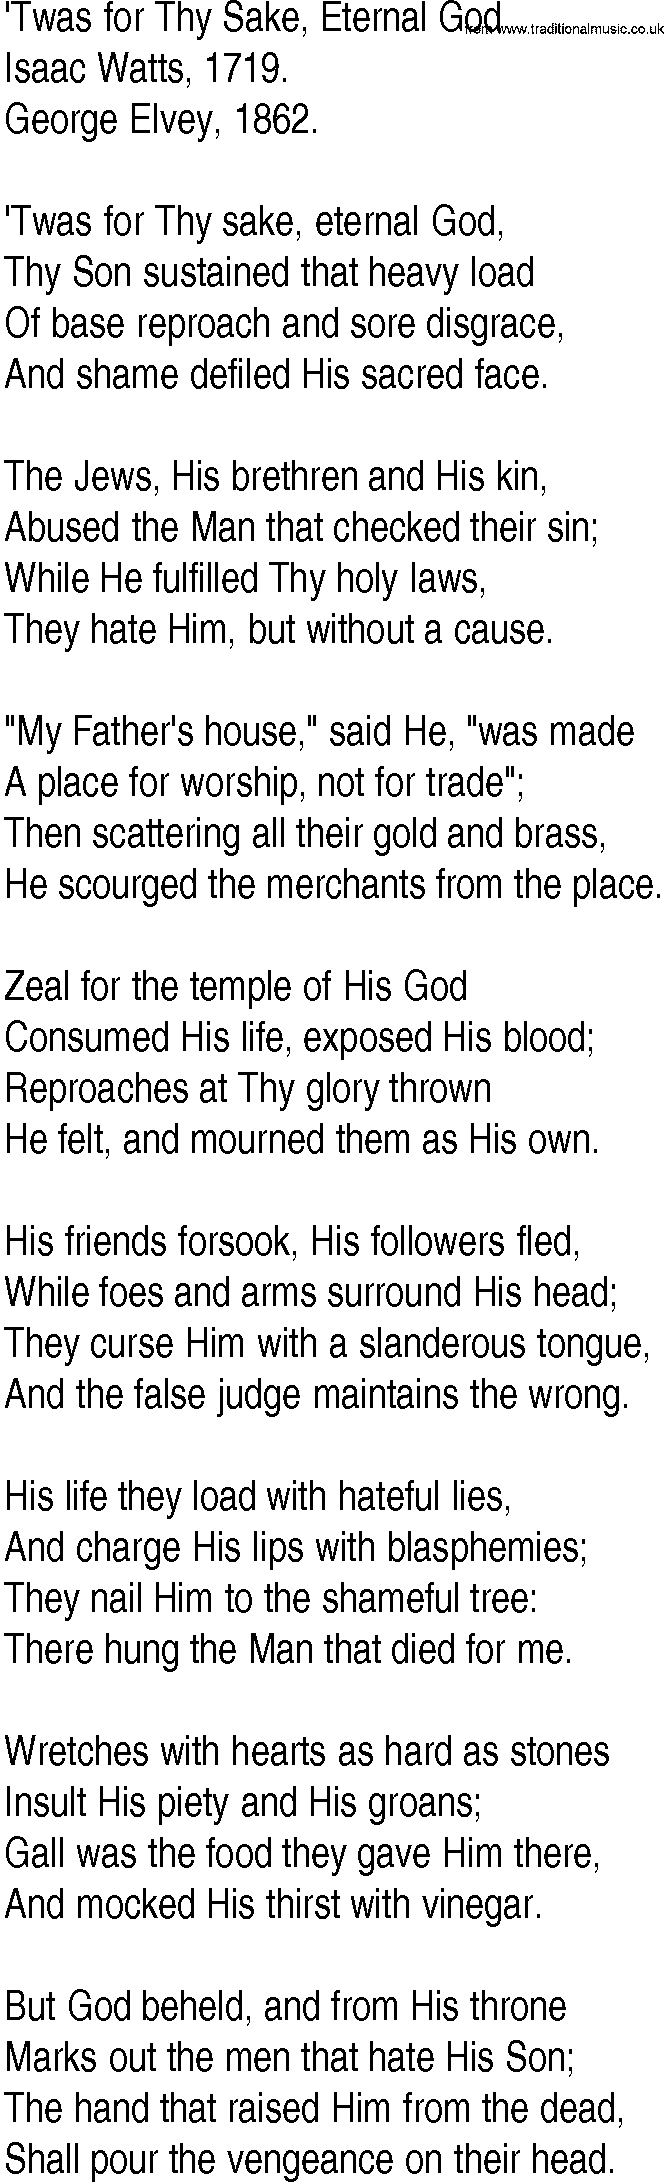 Hymn and Gospel Song: 'Twas for Thy Sake, Eternal God by Isaac Watts lyrics